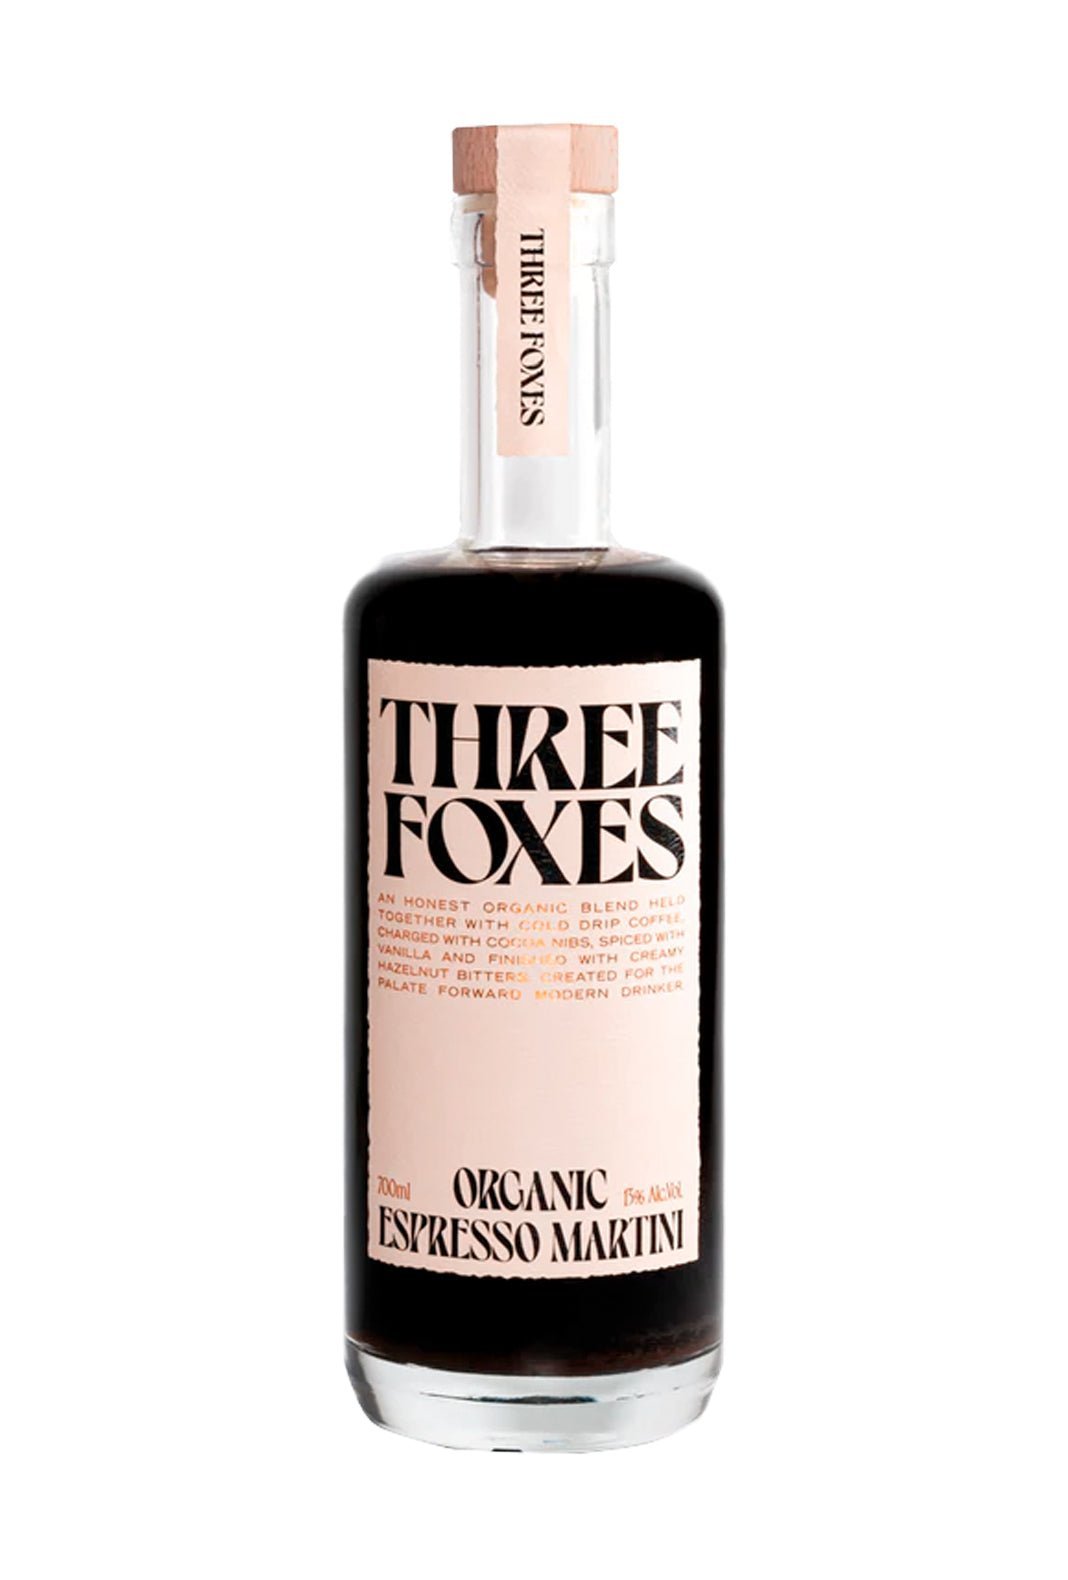 Three Foxes Organic Espresso Martini 13% 700ml | | Shop online at Spirits of France